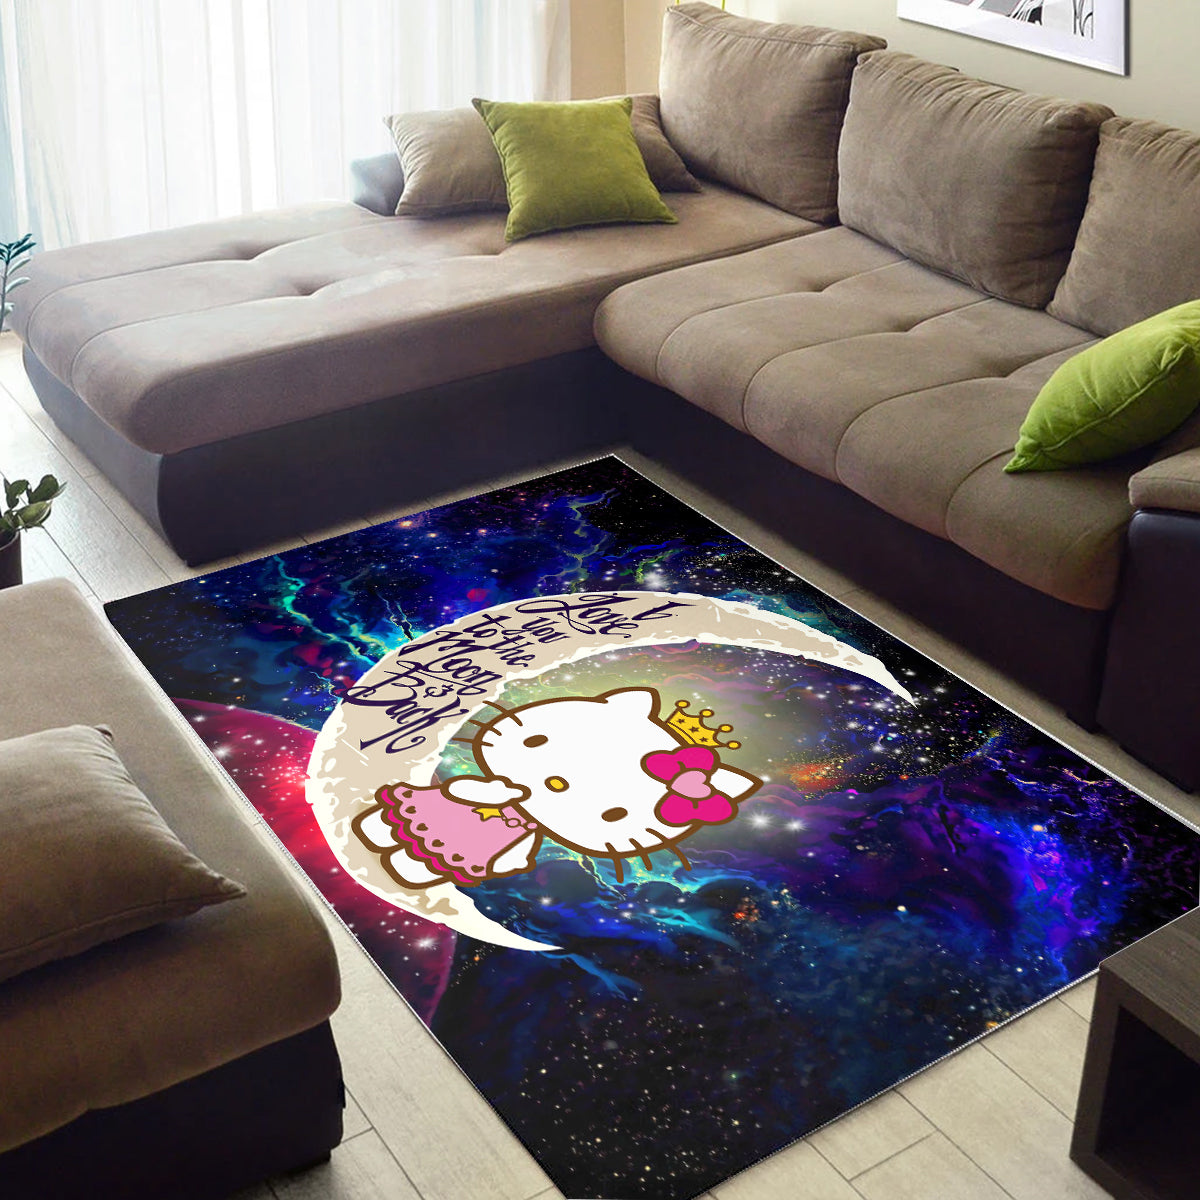 Hello Kitty Love You To The Moon Galaxy Carpet Rug Home Room Decor